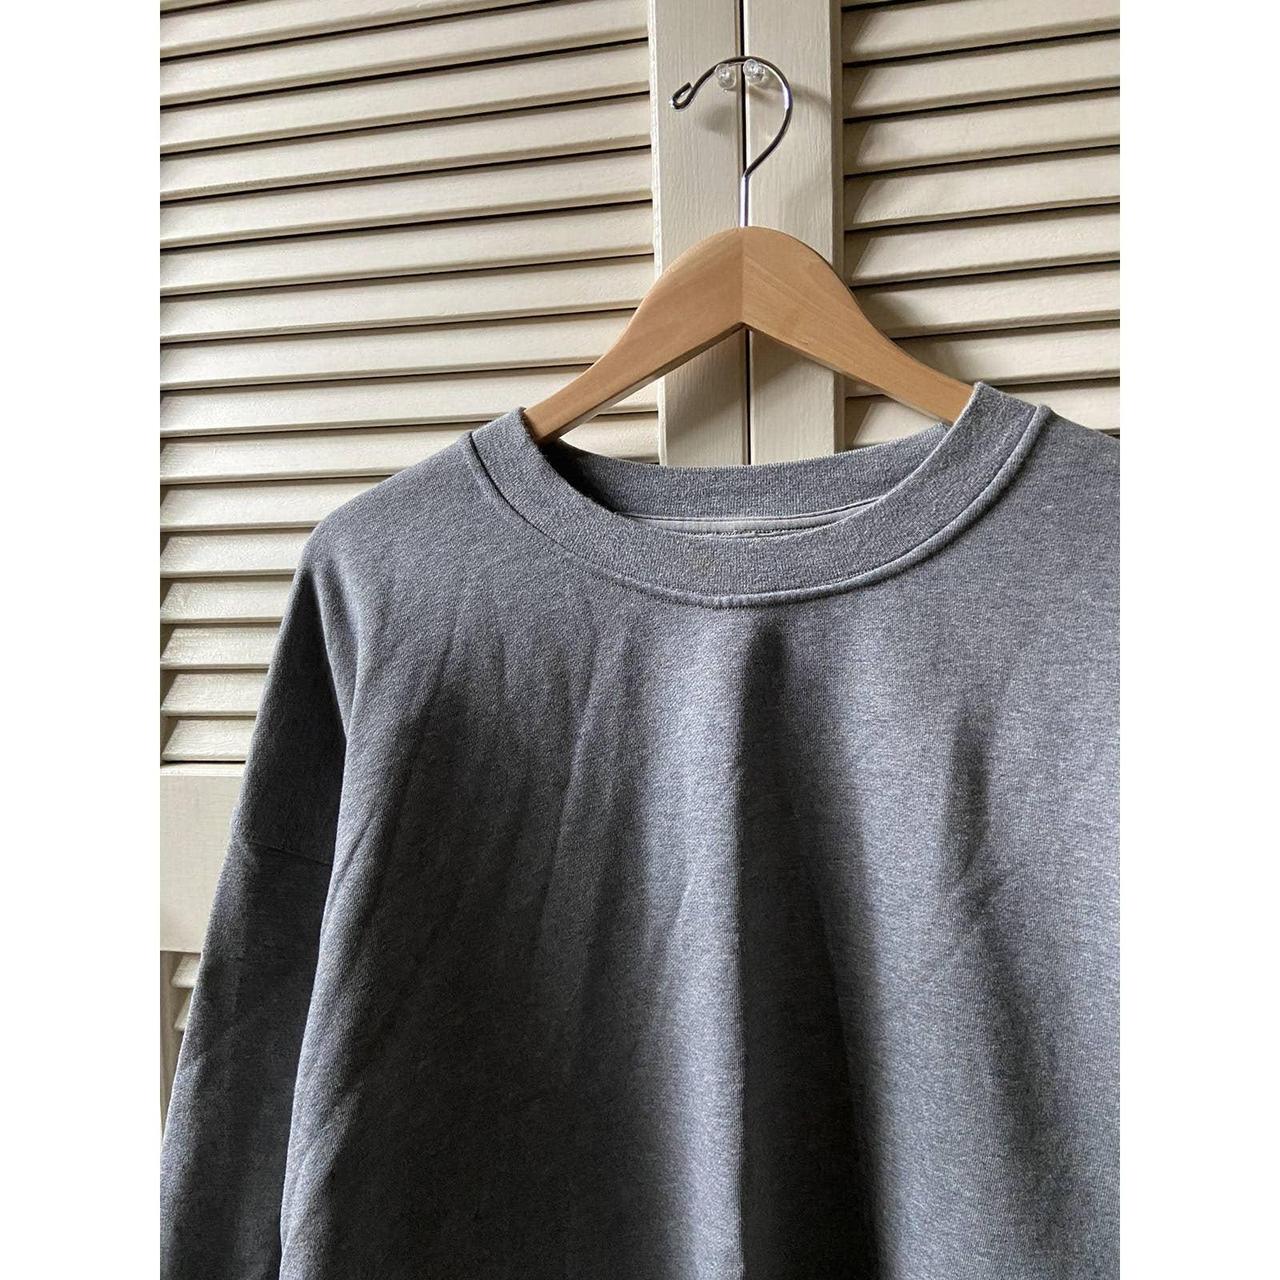 LuluLemon Dark Grey Sweatshirt Pullover Spellout - Depop